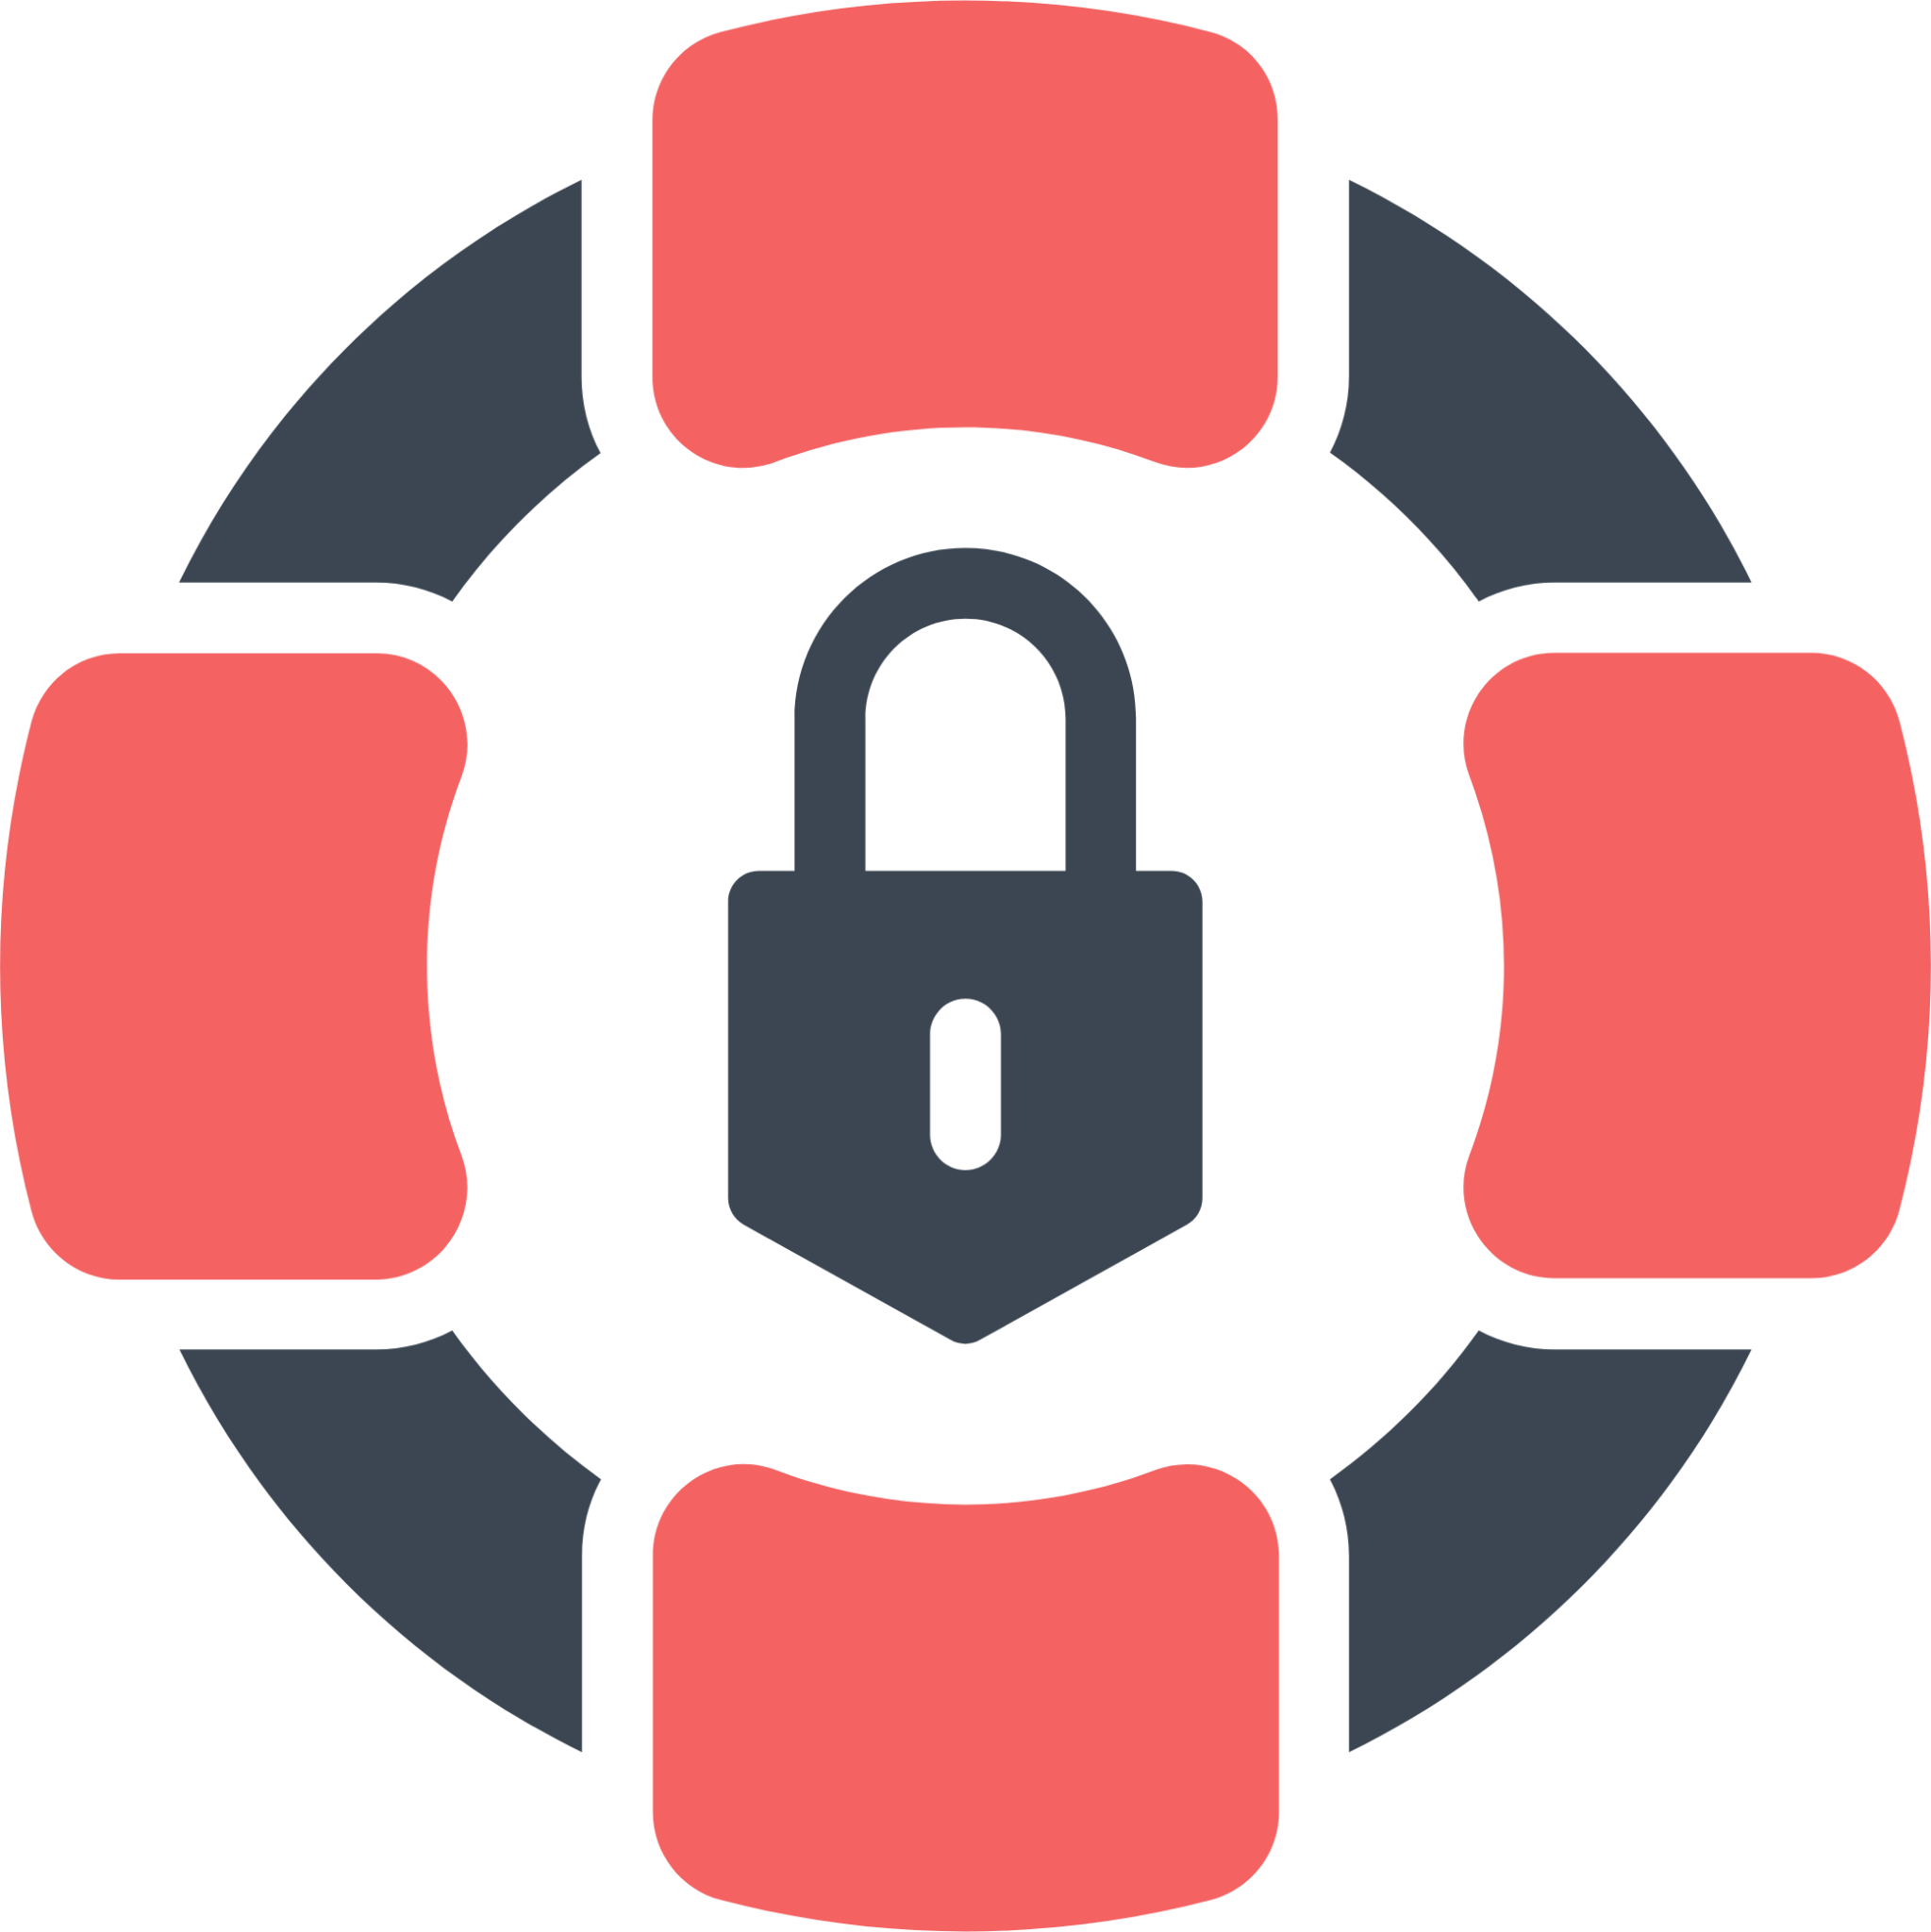 lock protect security 24 lock life icon